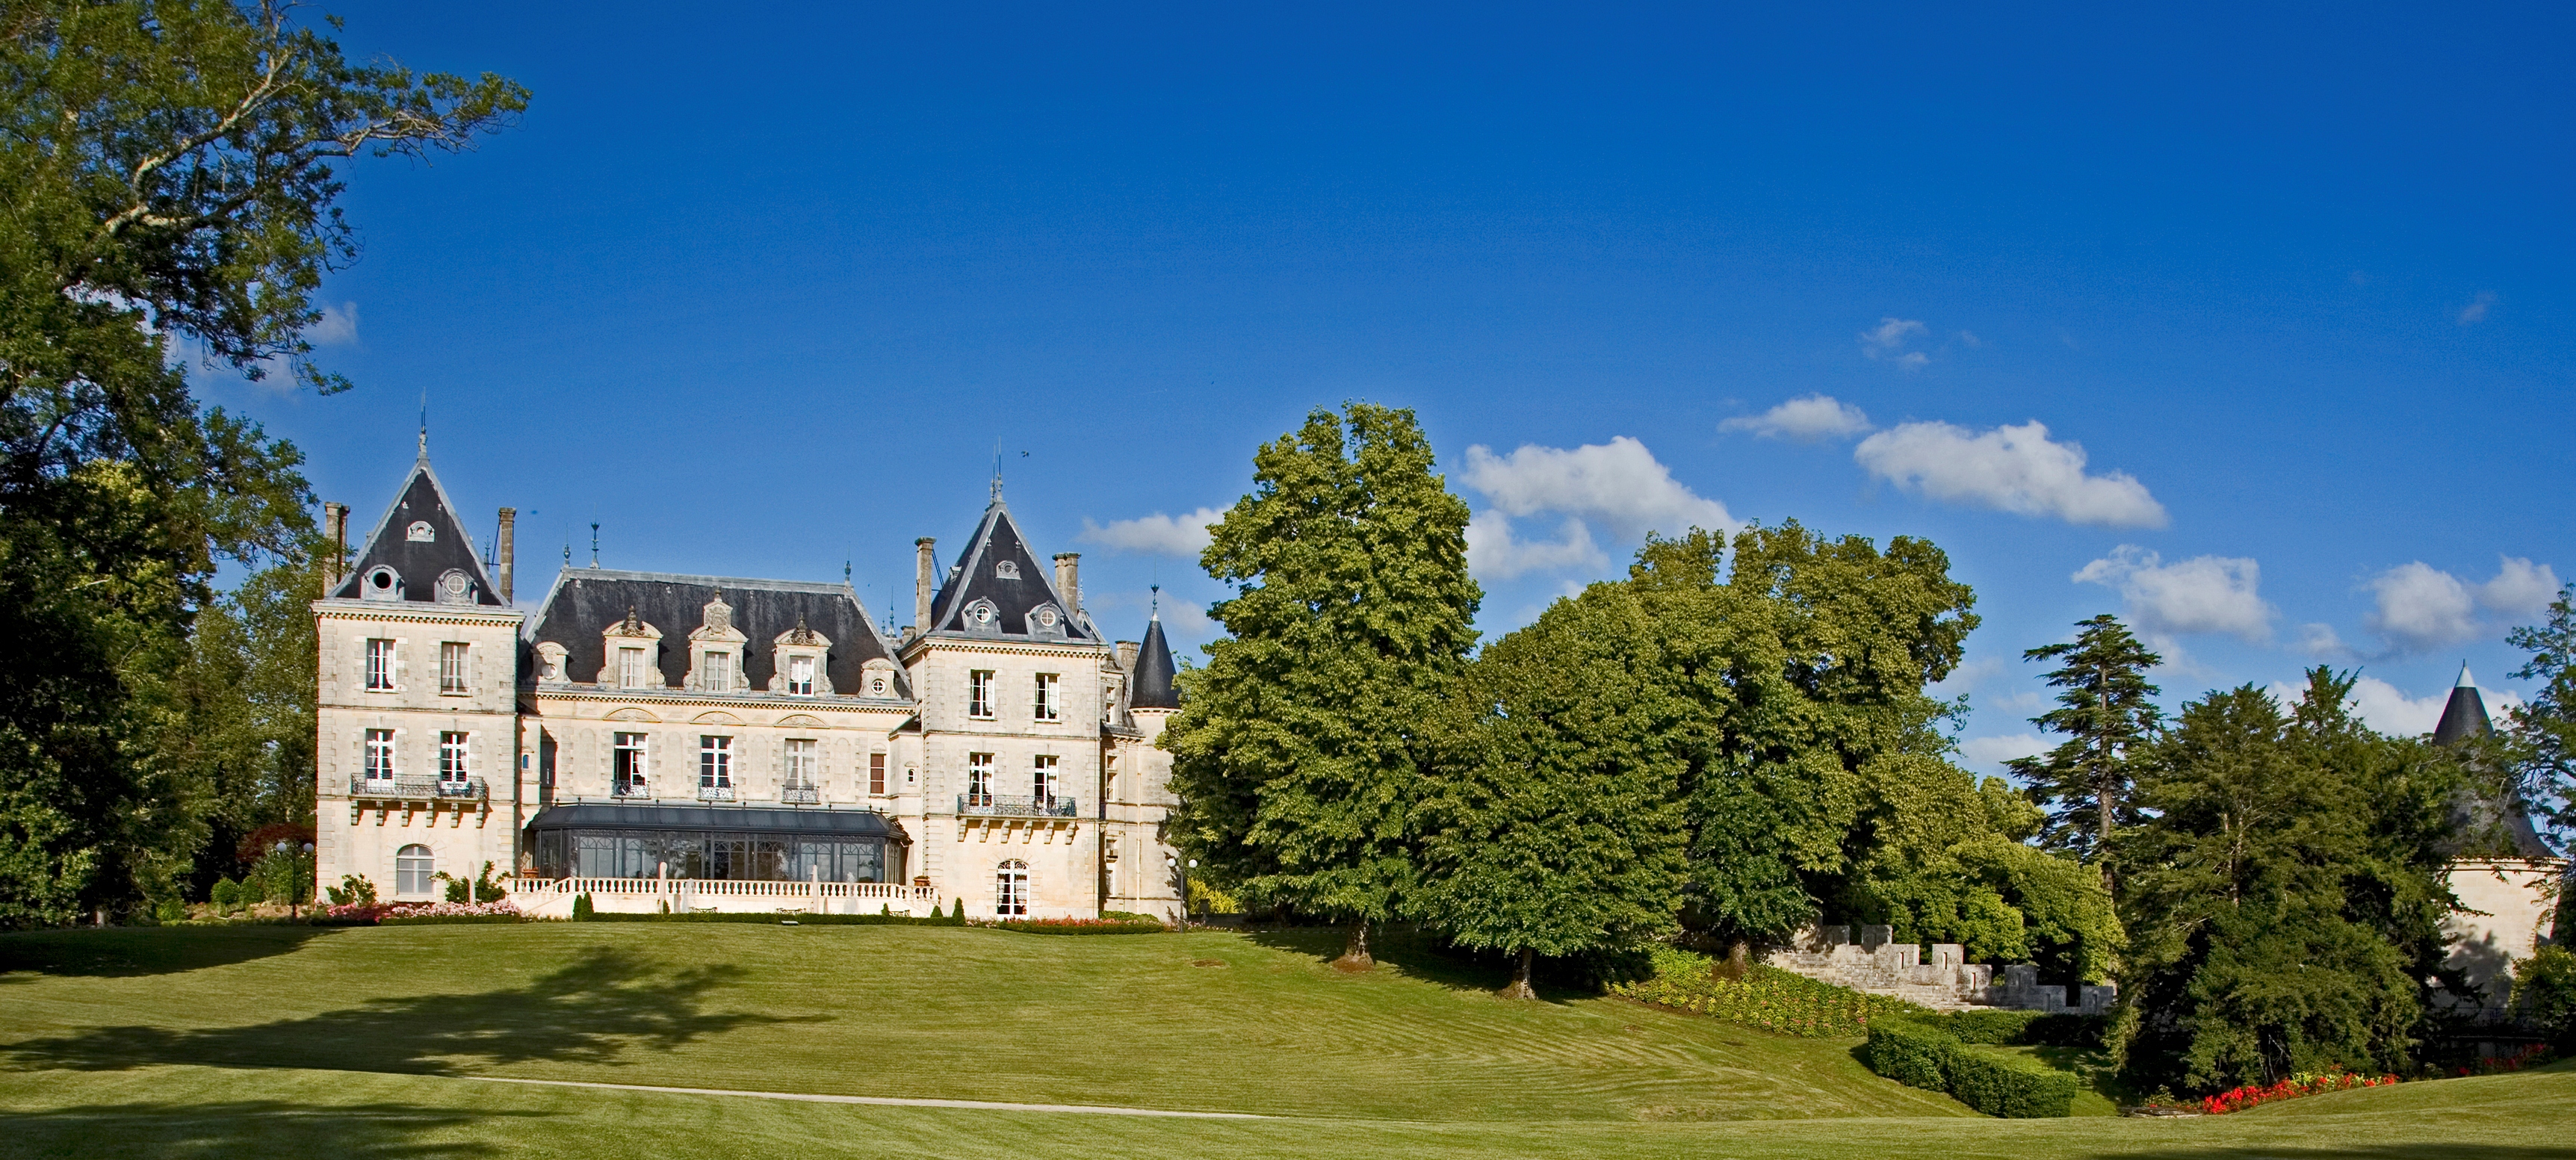 A château experience